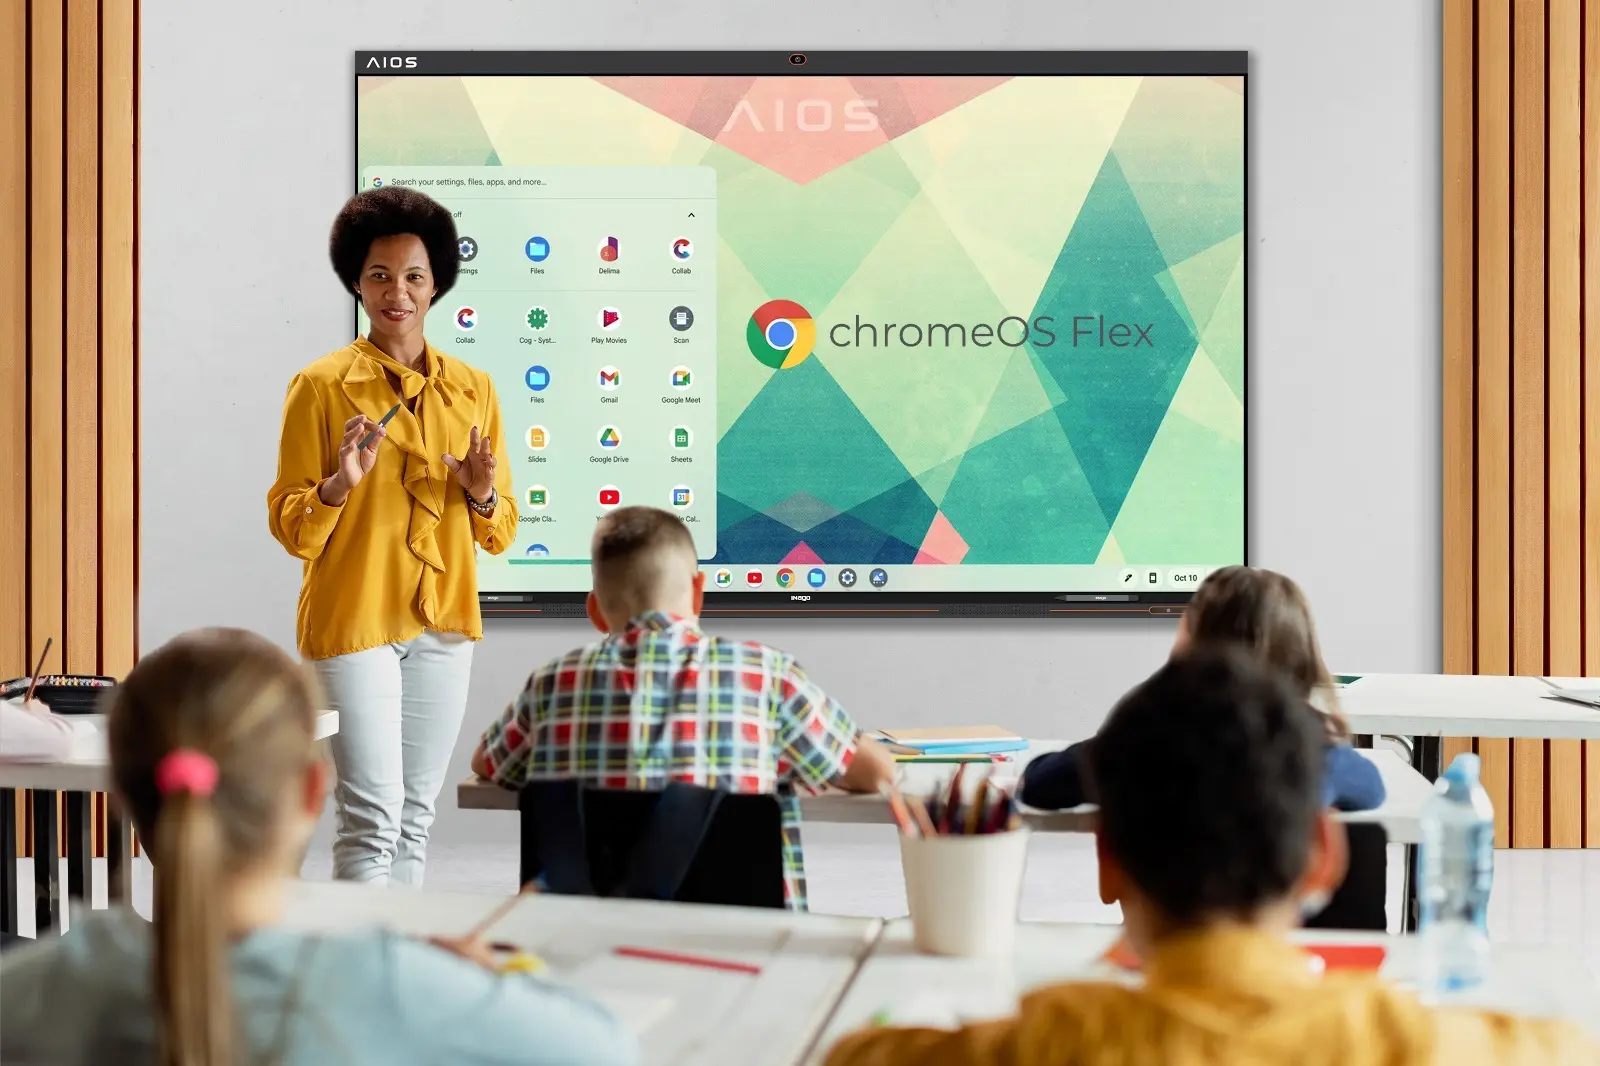 Make The Switch To ChromeOS Flex With IMAGO EDU Board